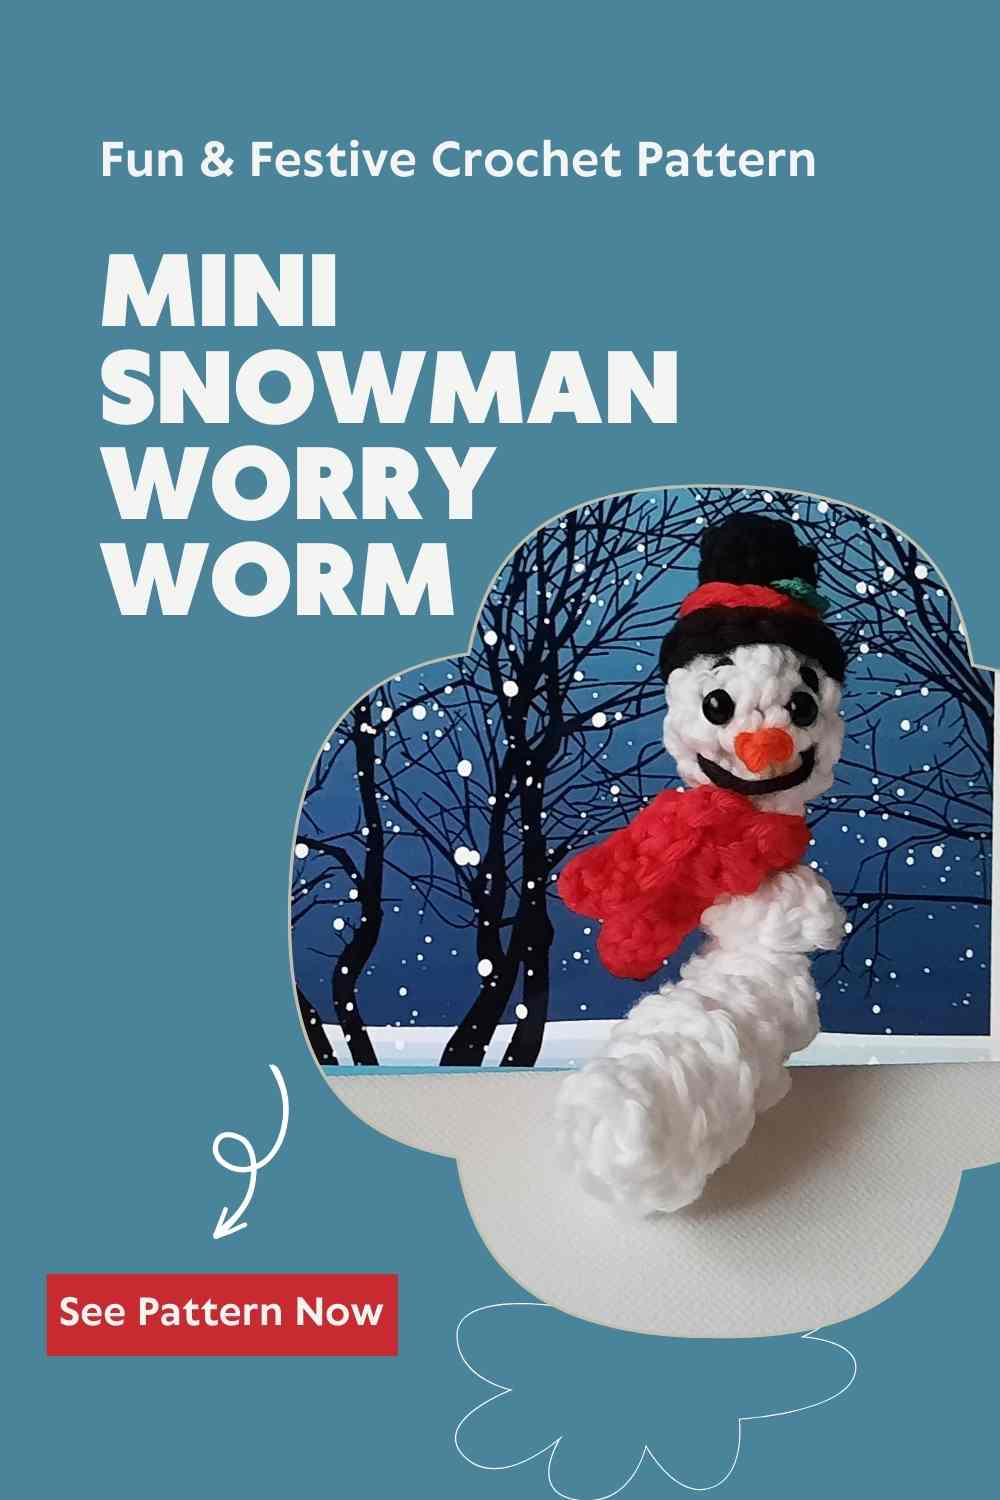 Snowman Worry Worm crochet pattern